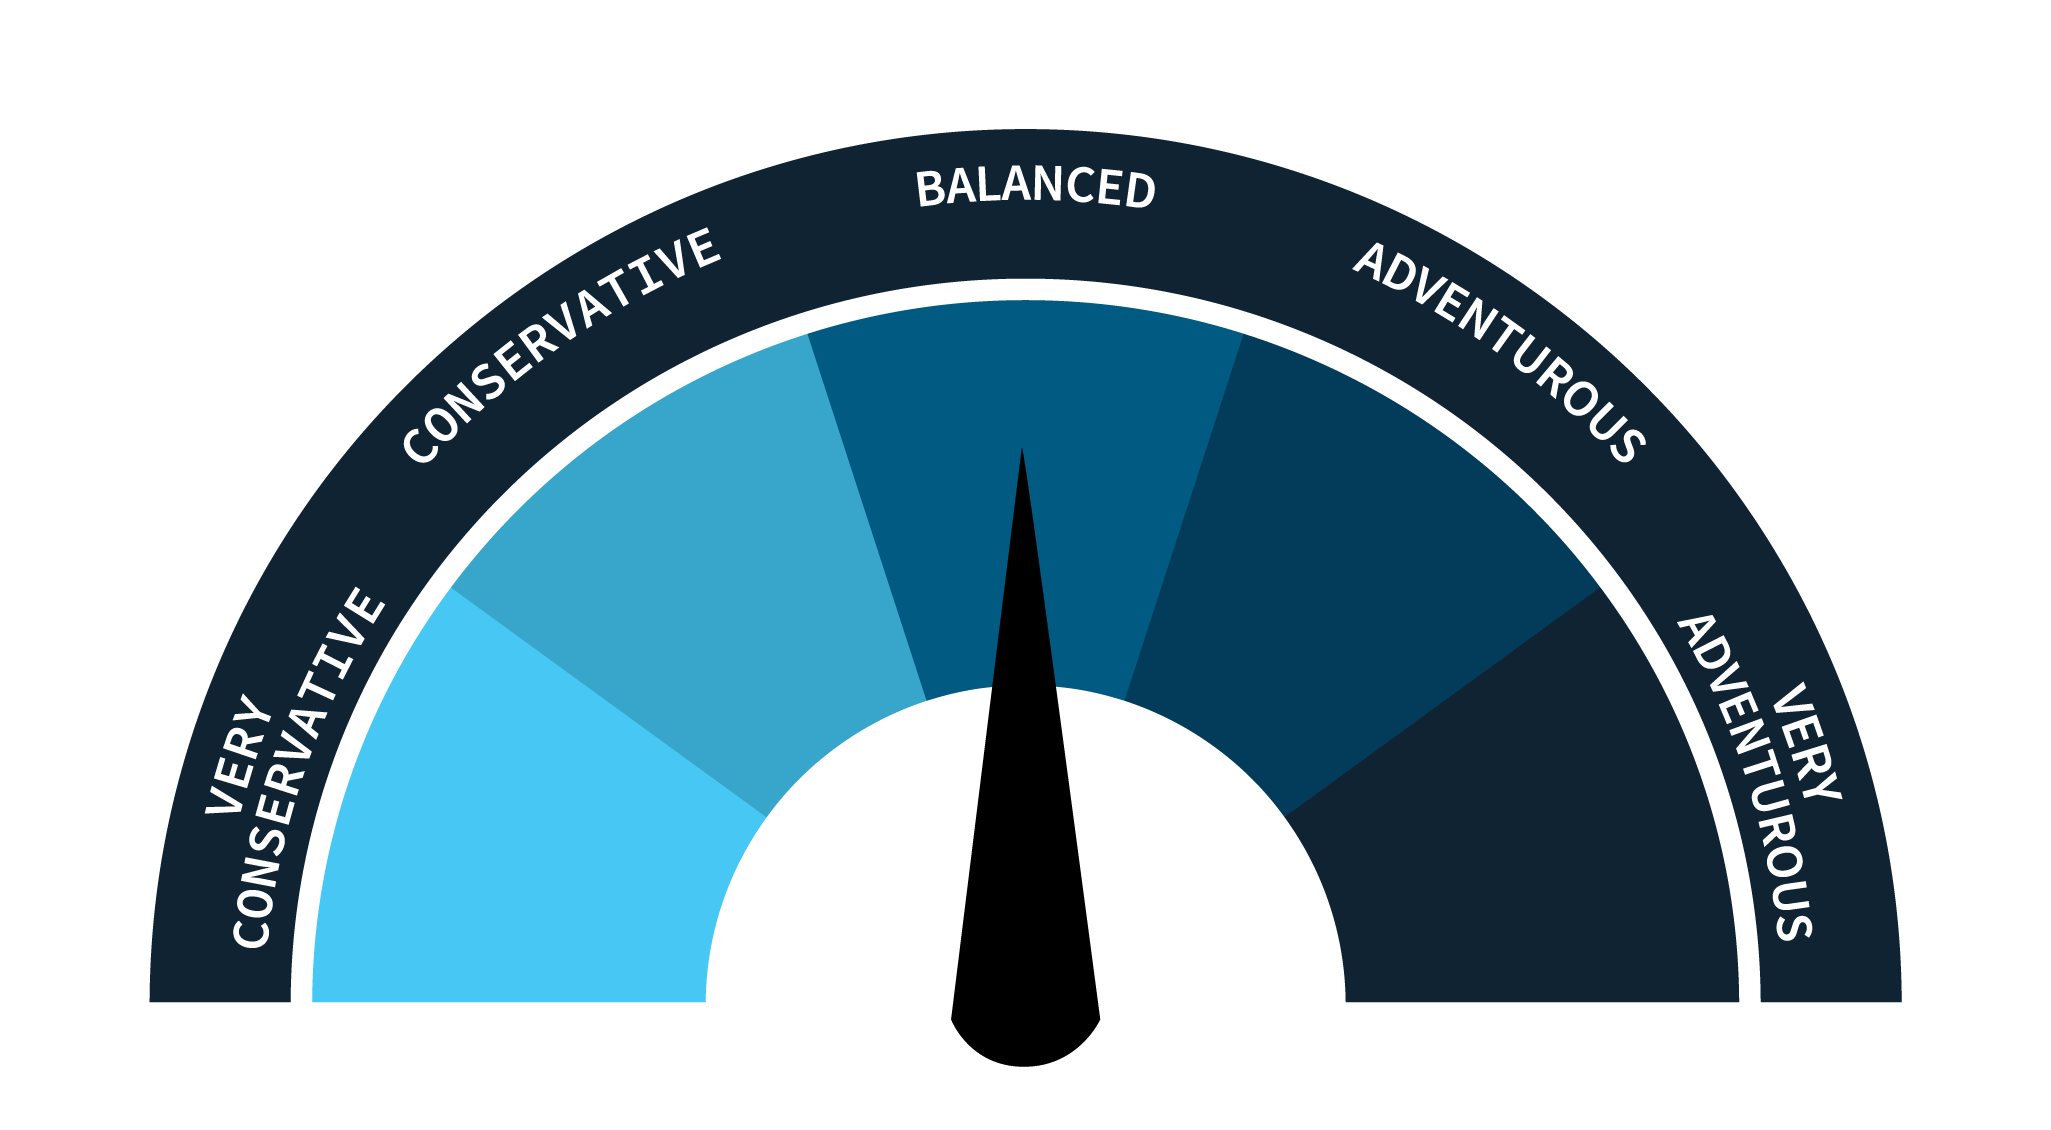 Tactive investment gauge for balanced models